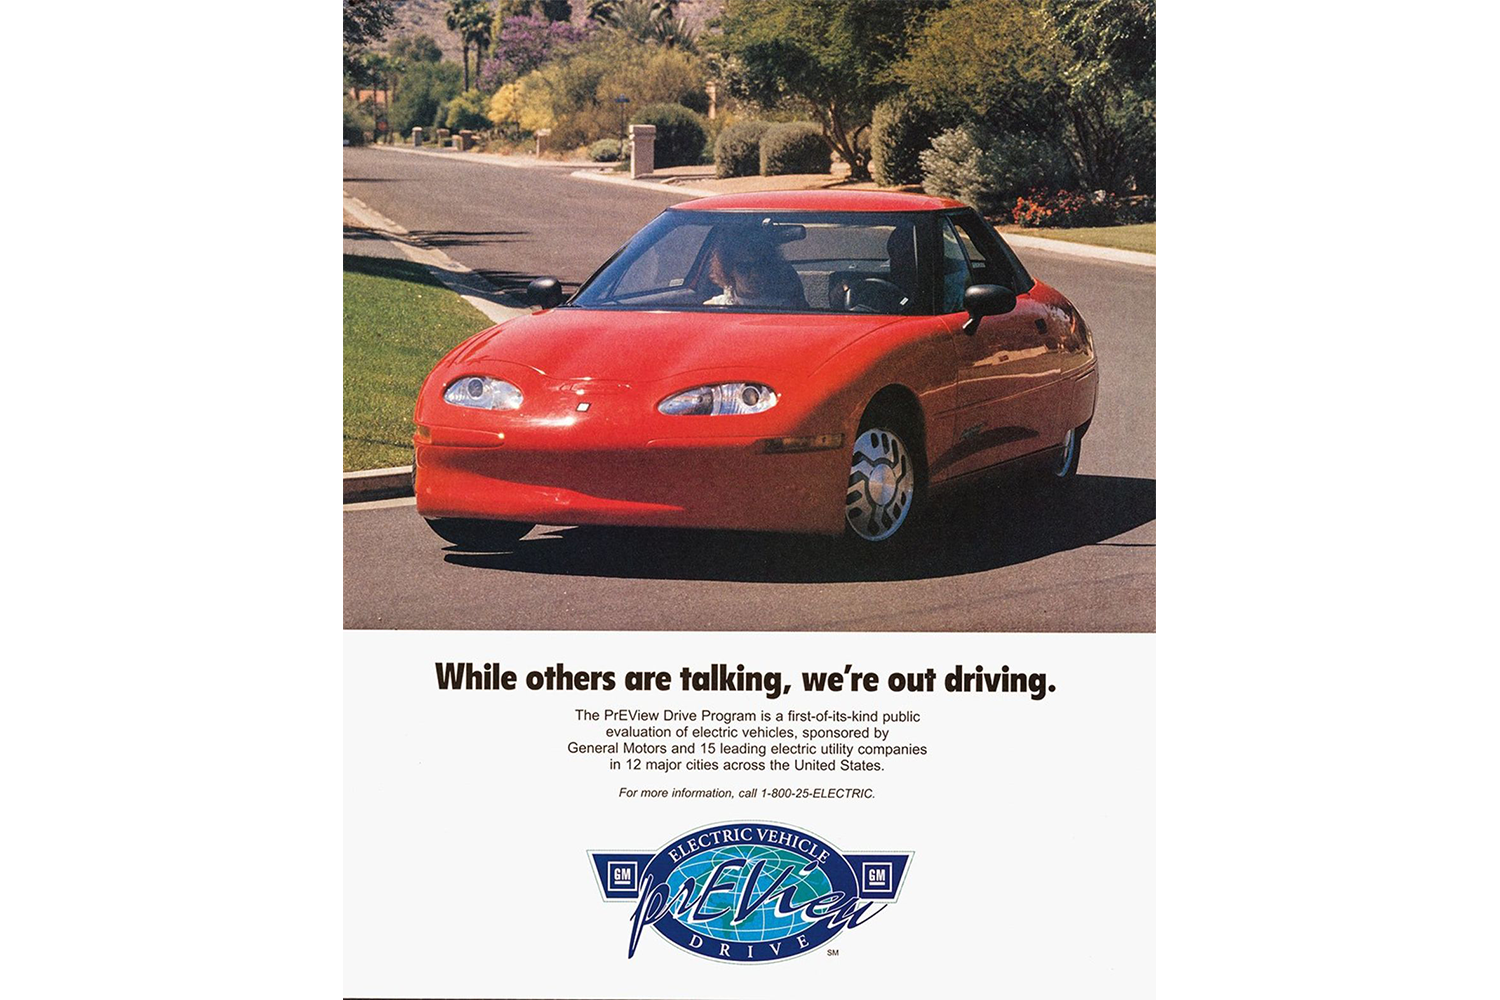 A General Motors EV1 PrEView advertisement